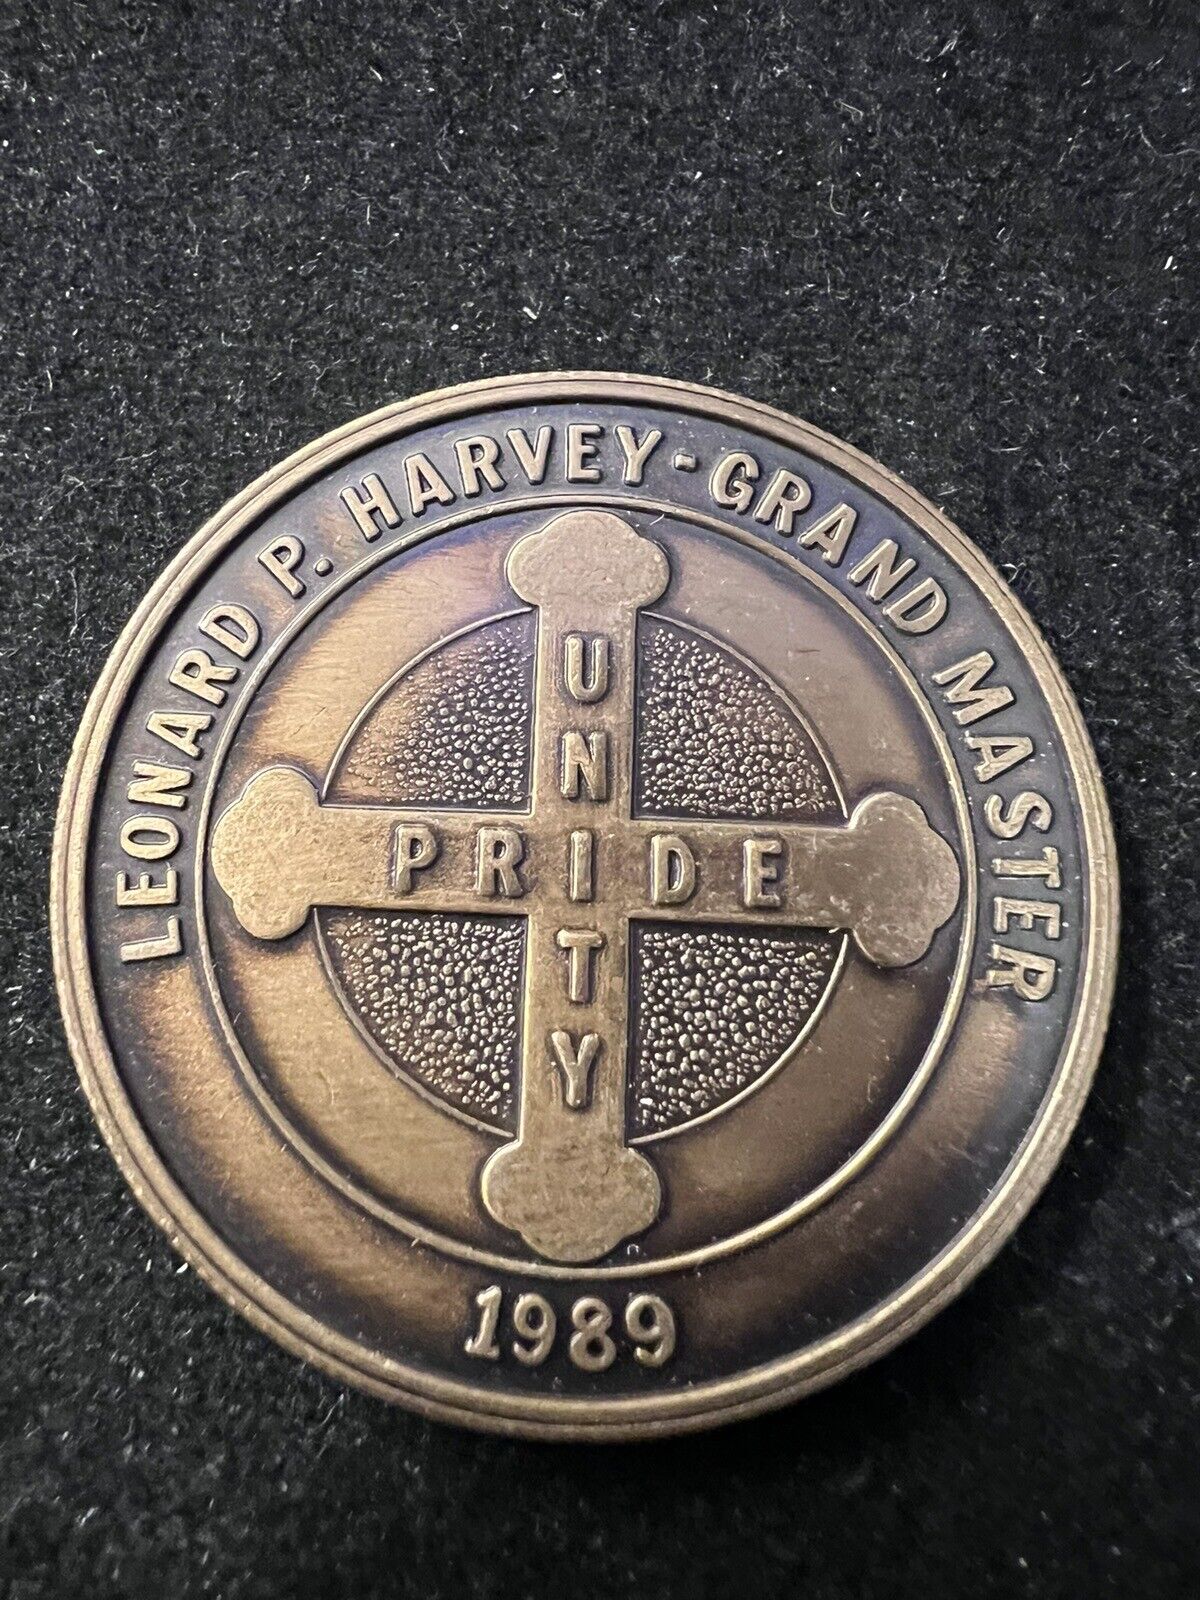 MASONIC COIN LEONARD P. HARVEY GRAND MASTER 1989 GRAND LODGE OF TEXAS - B930